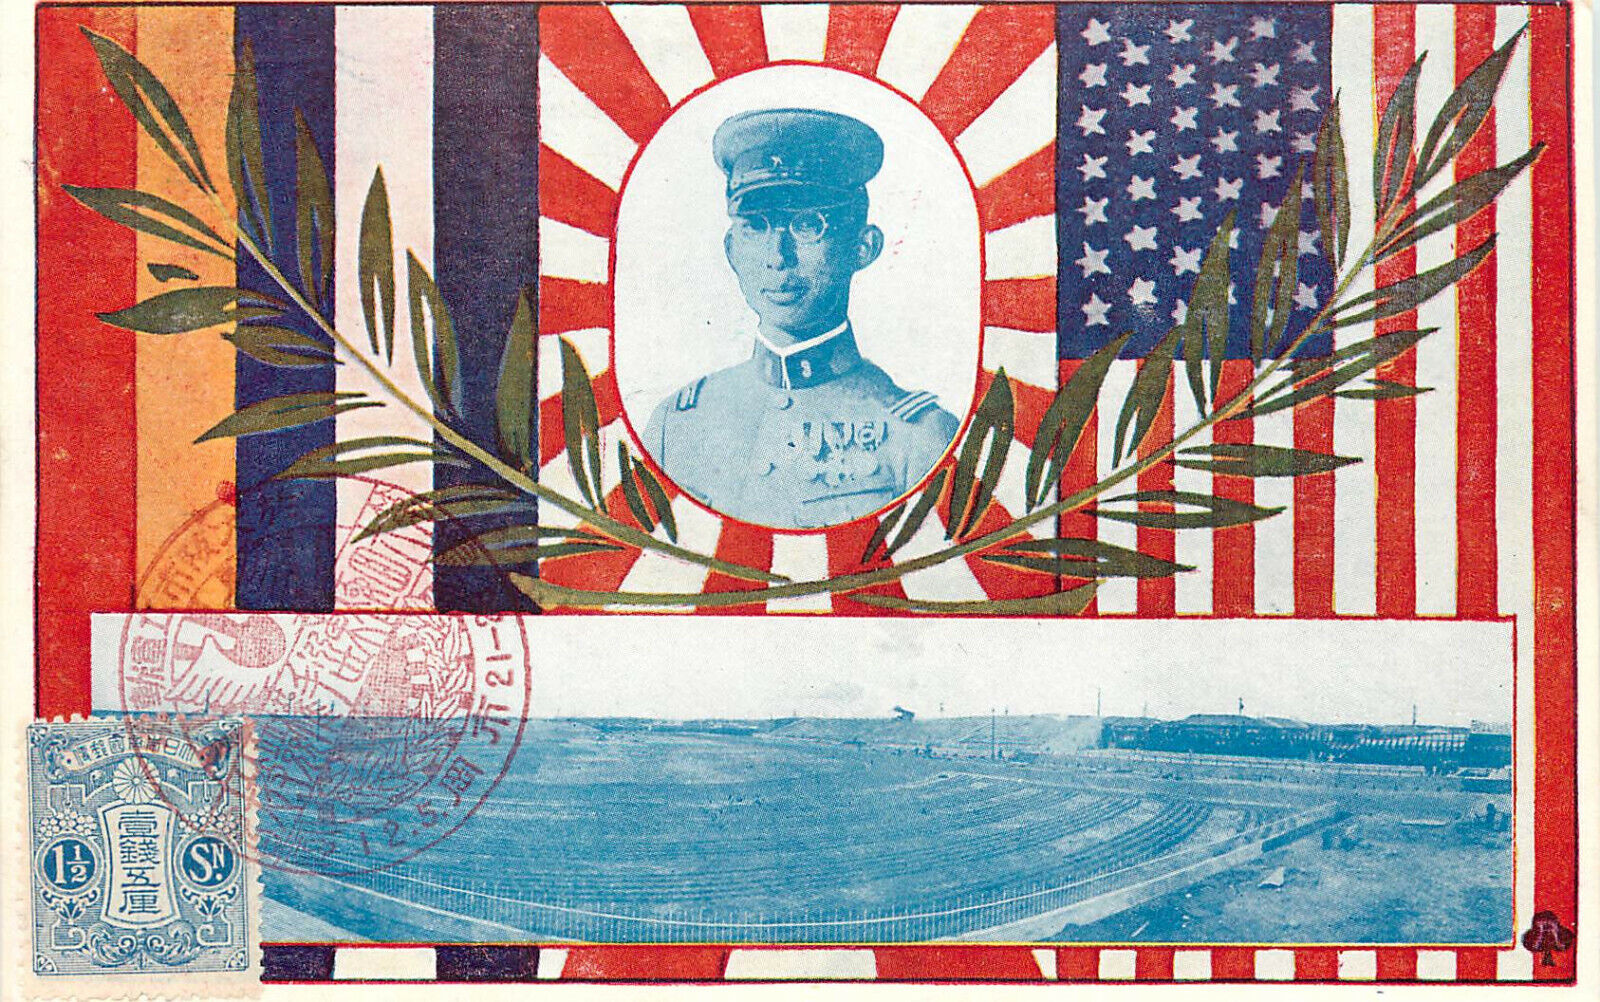 Postcard Flags U.S. Japan Povisional Chinese Govt Far Eastern Championship Games